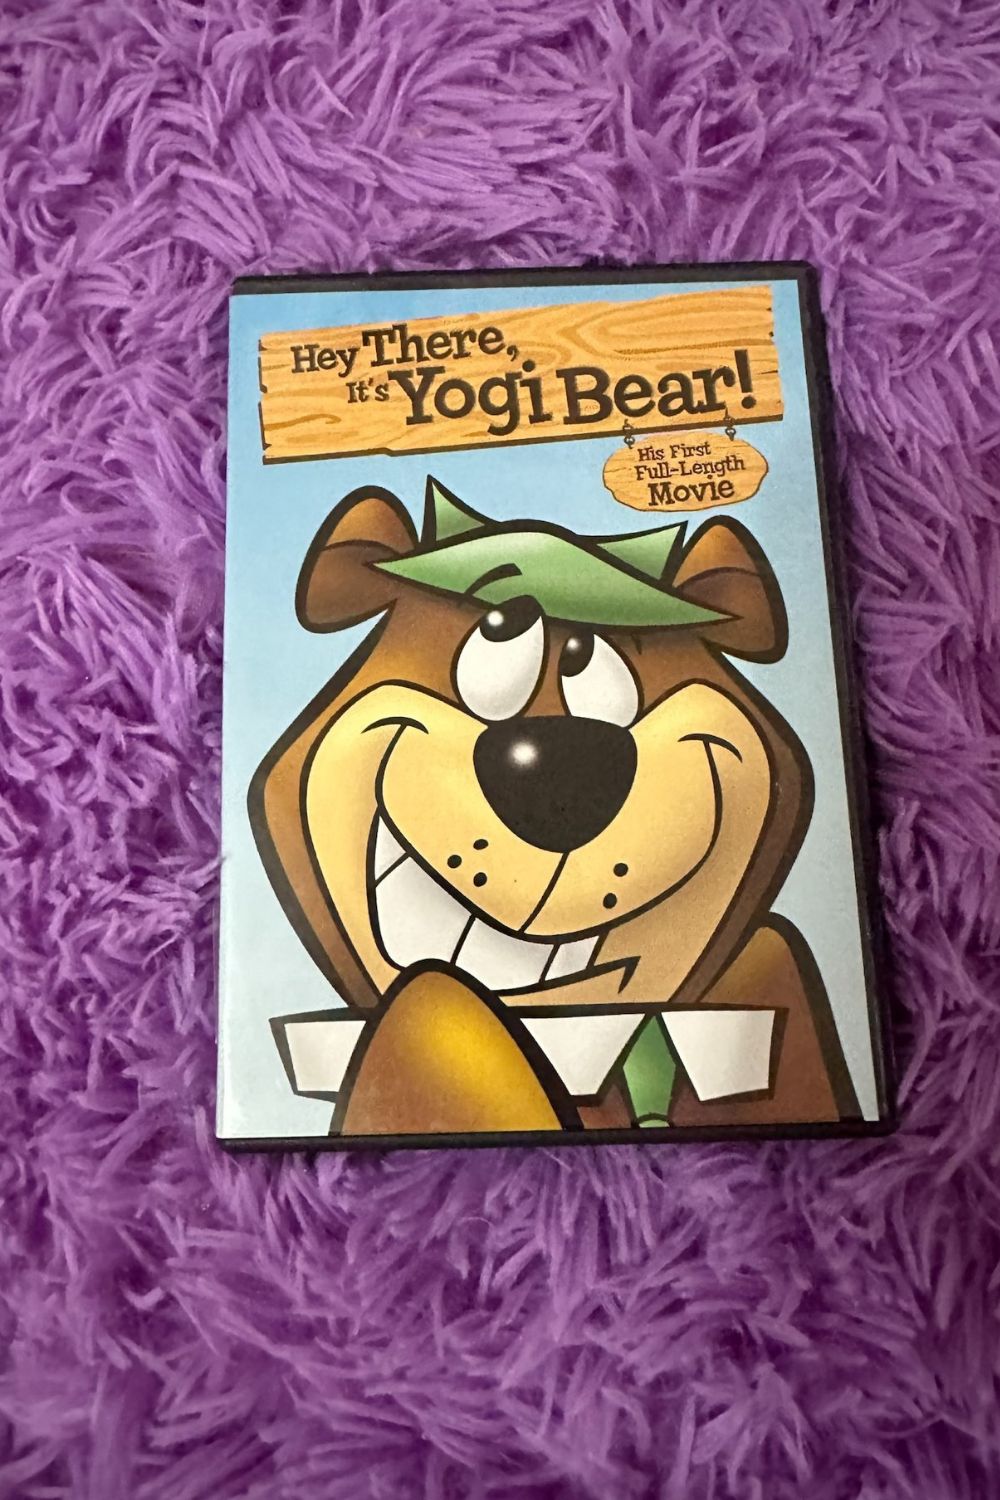 HEY THERE, IT'S YOGI BEAR! HIS FIRST FULL LENGTH MOVIE DVD*